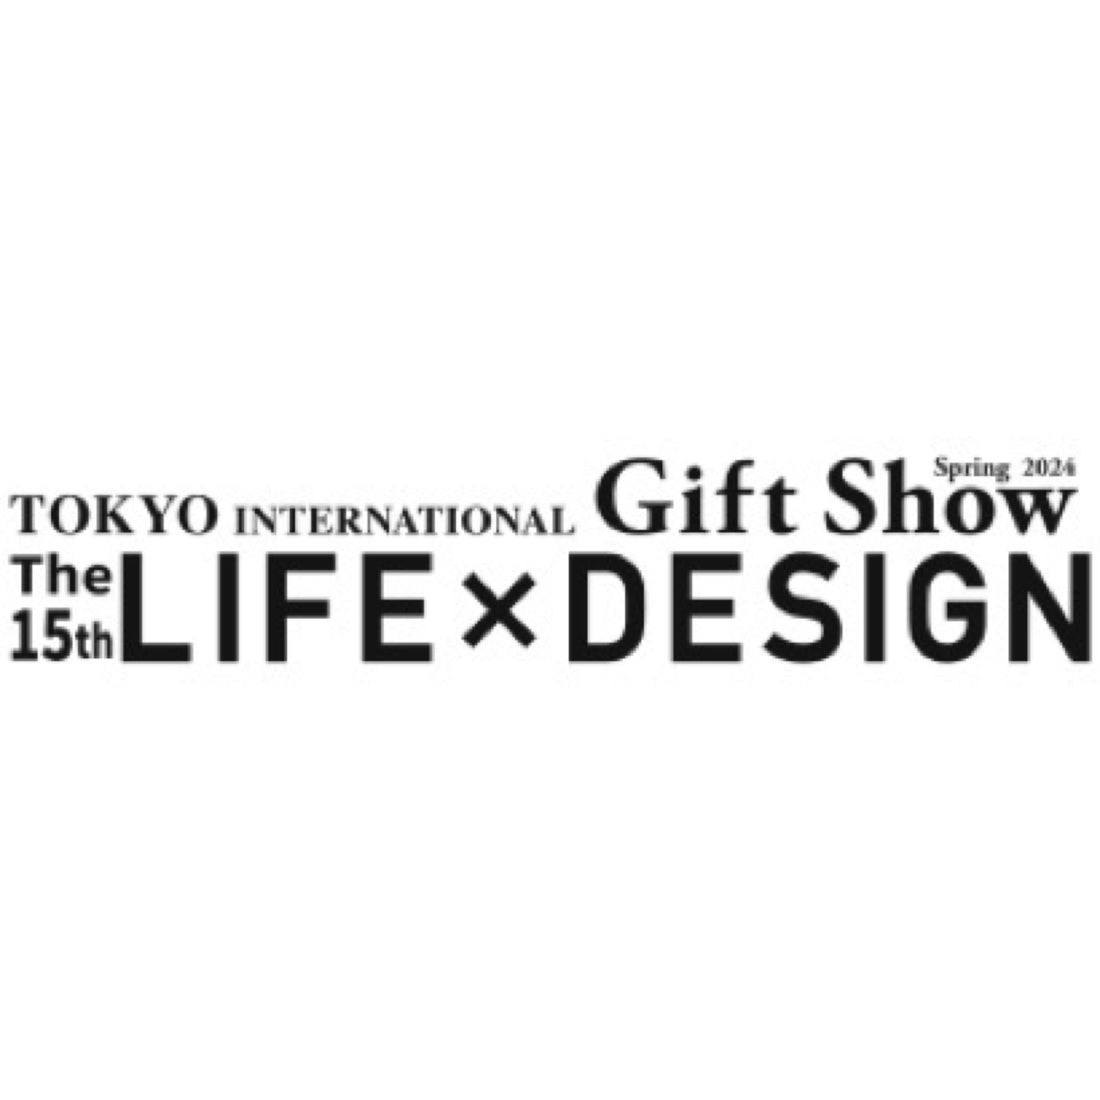 “LIFE × DESIGN TOKYO 2024" exhibition